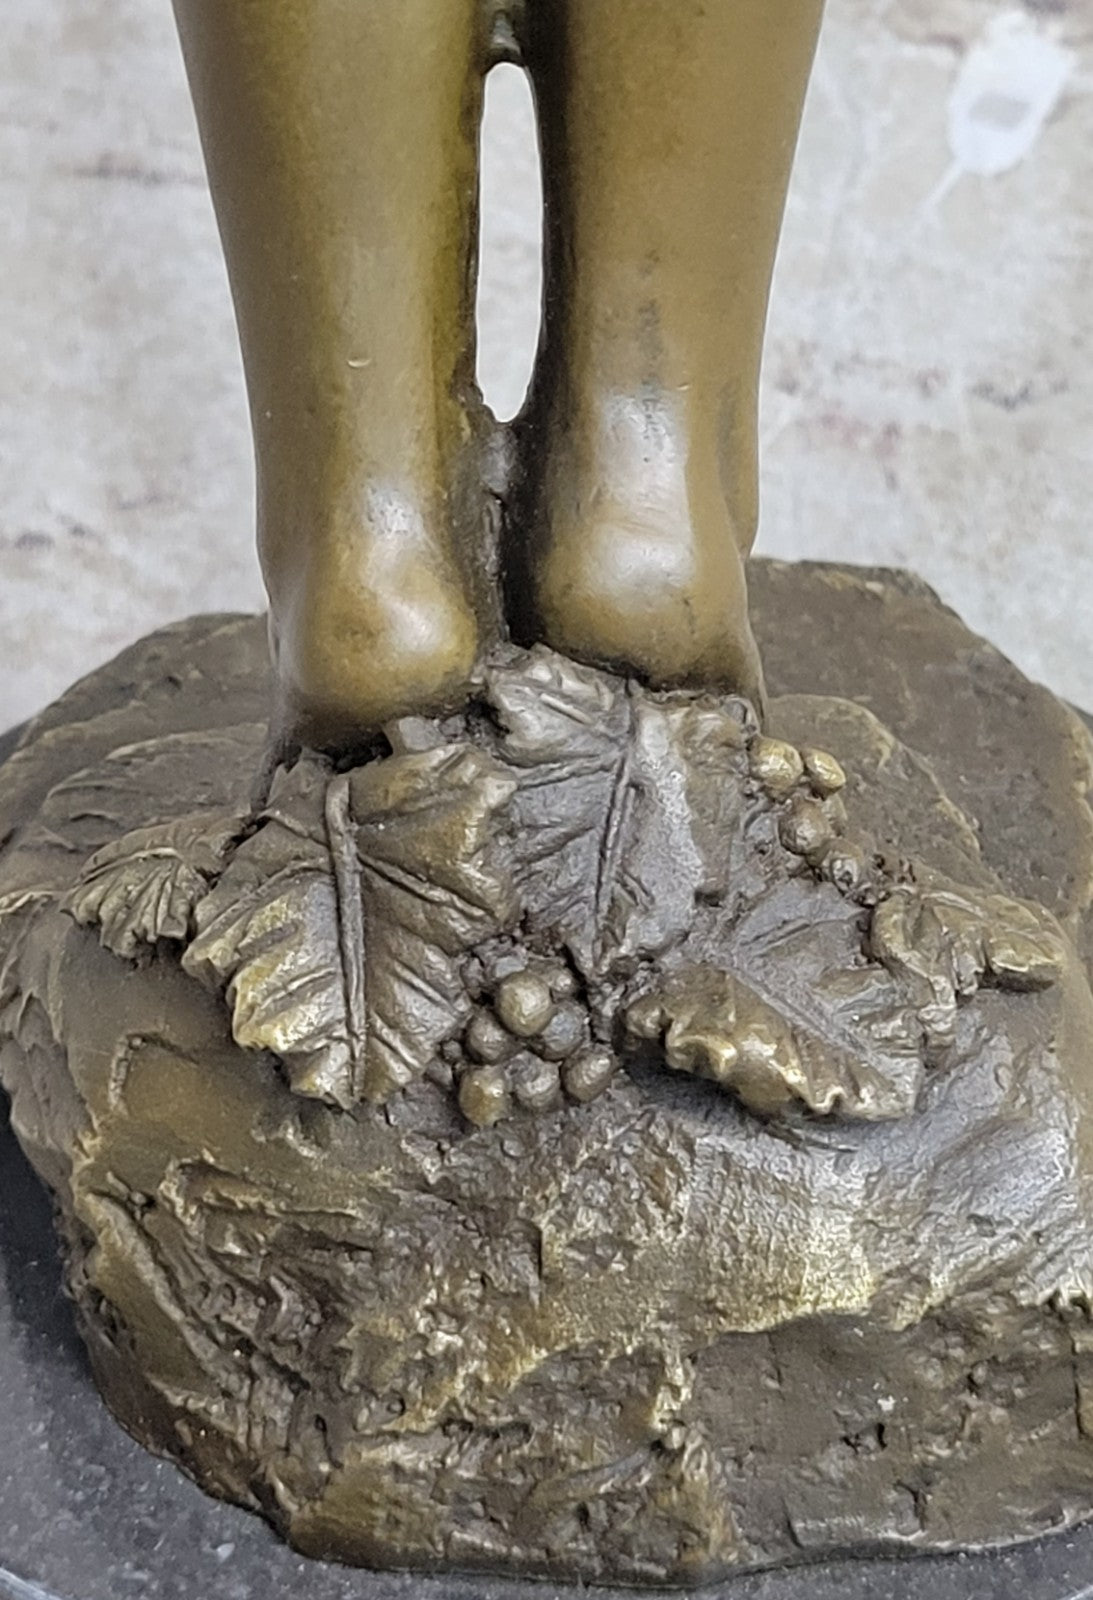 Handcrafted bronze sculpture Stretching Beauty Nude Decor Figure Decore SALE